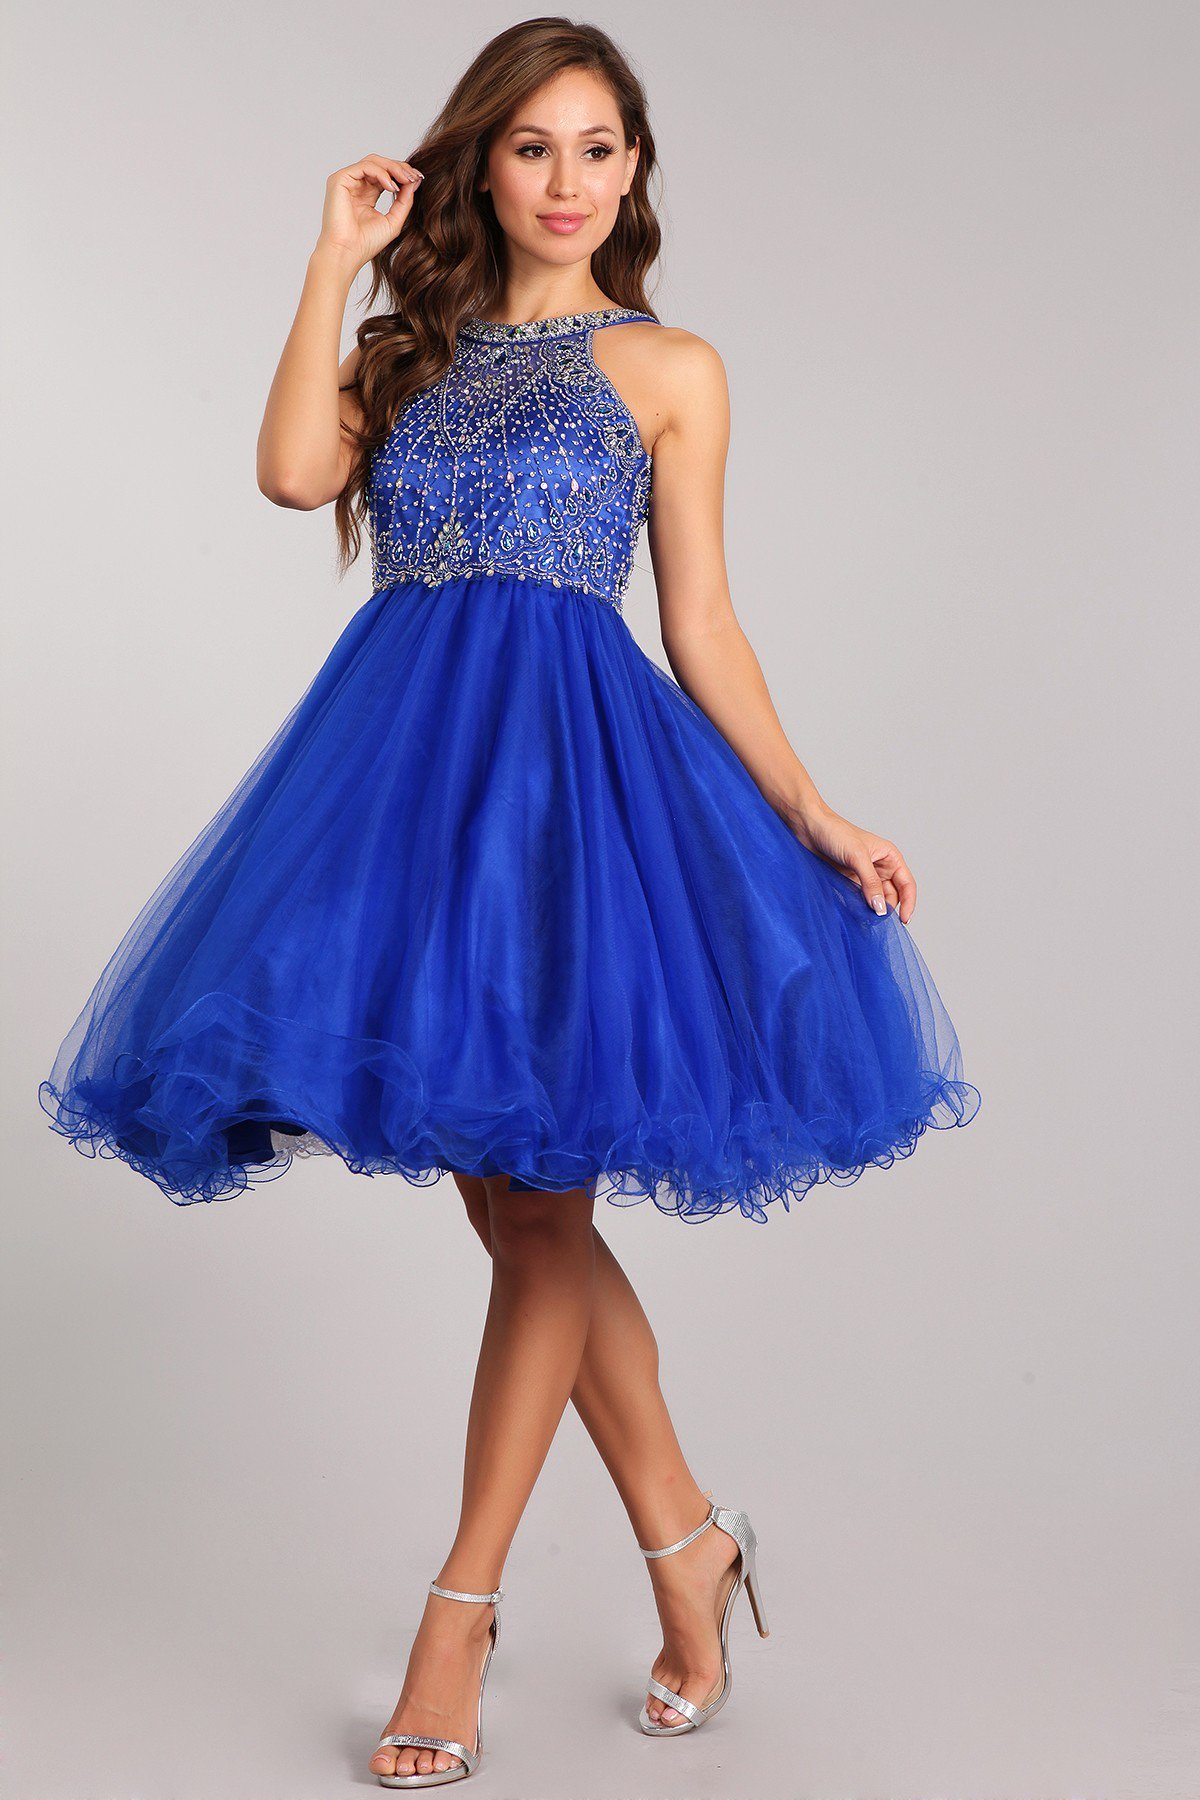 blue quinceanera court dresses